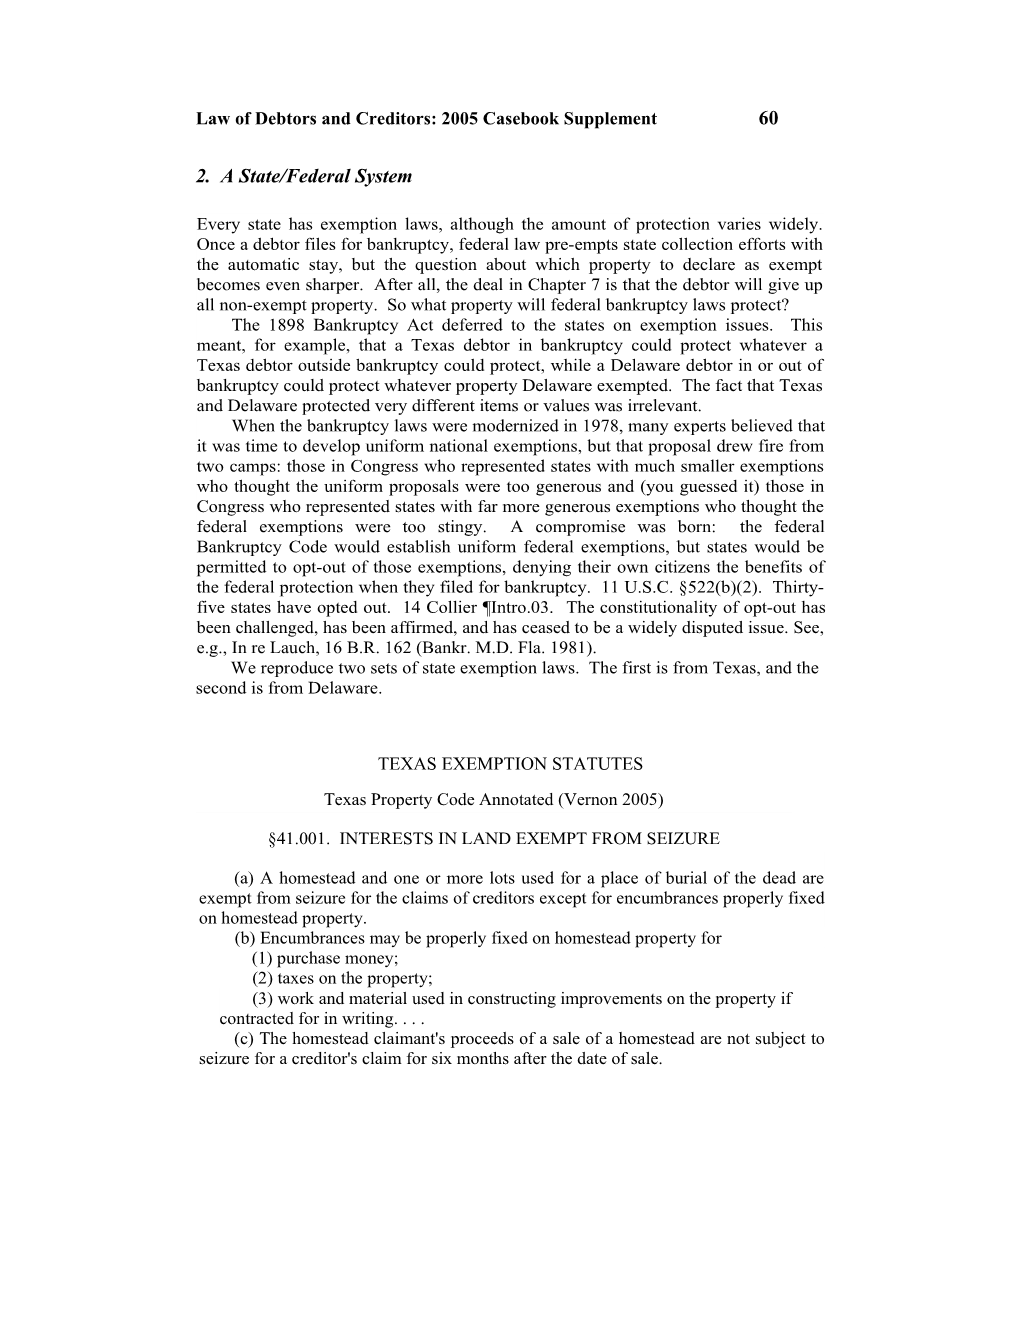 Law Of Debtors And Creditors: 2005 Casebook Supplement 239 C. PROPERTY EXEMPT FROM SEIZURE